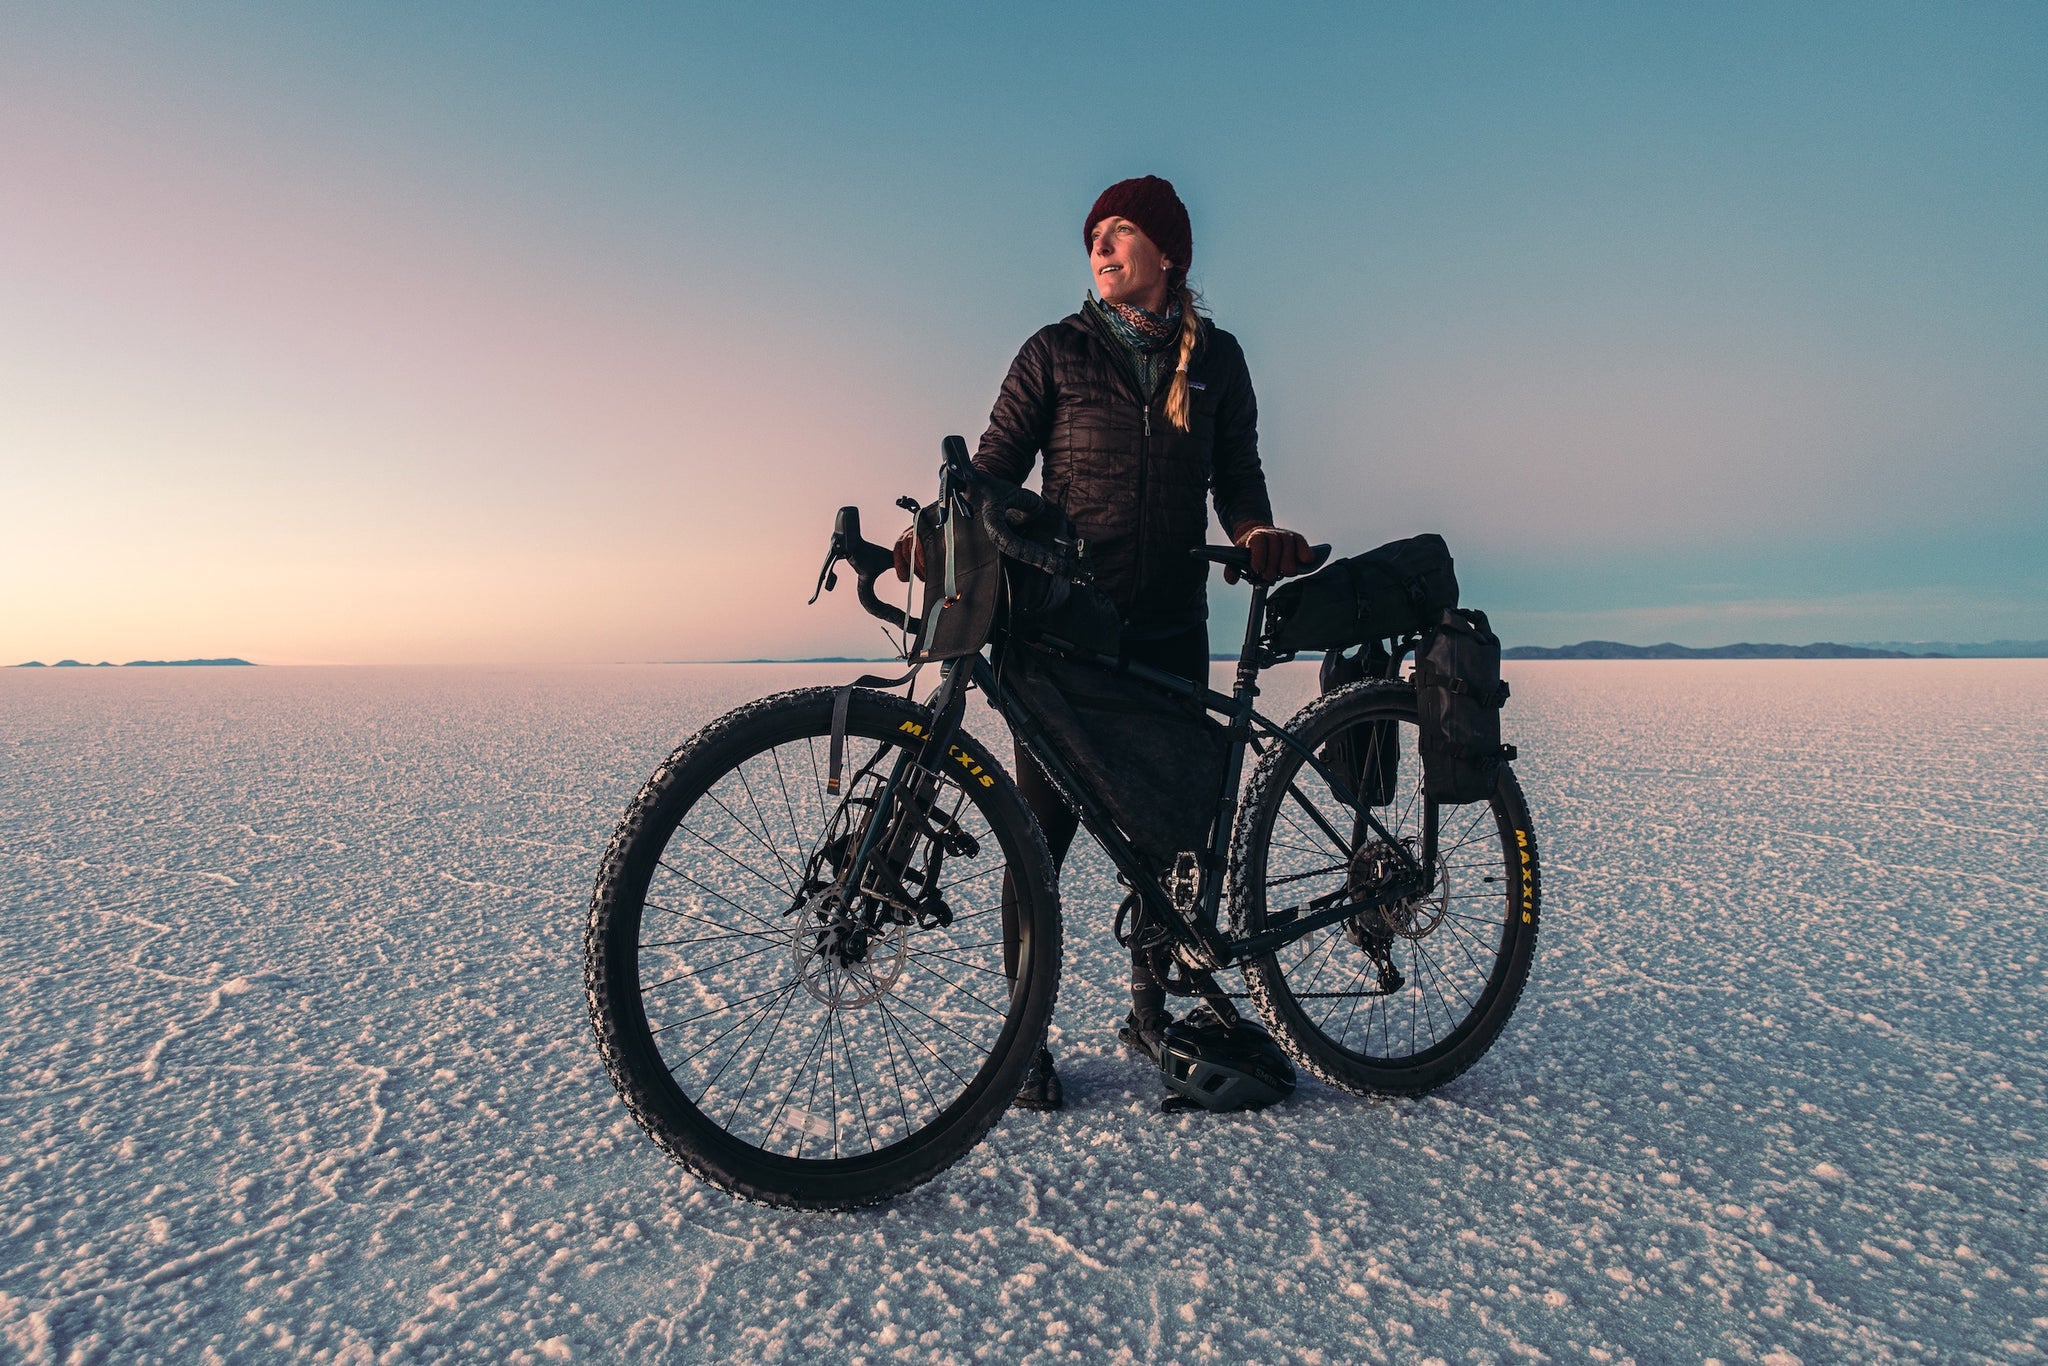 Bicyclist posing on salt flat with bike